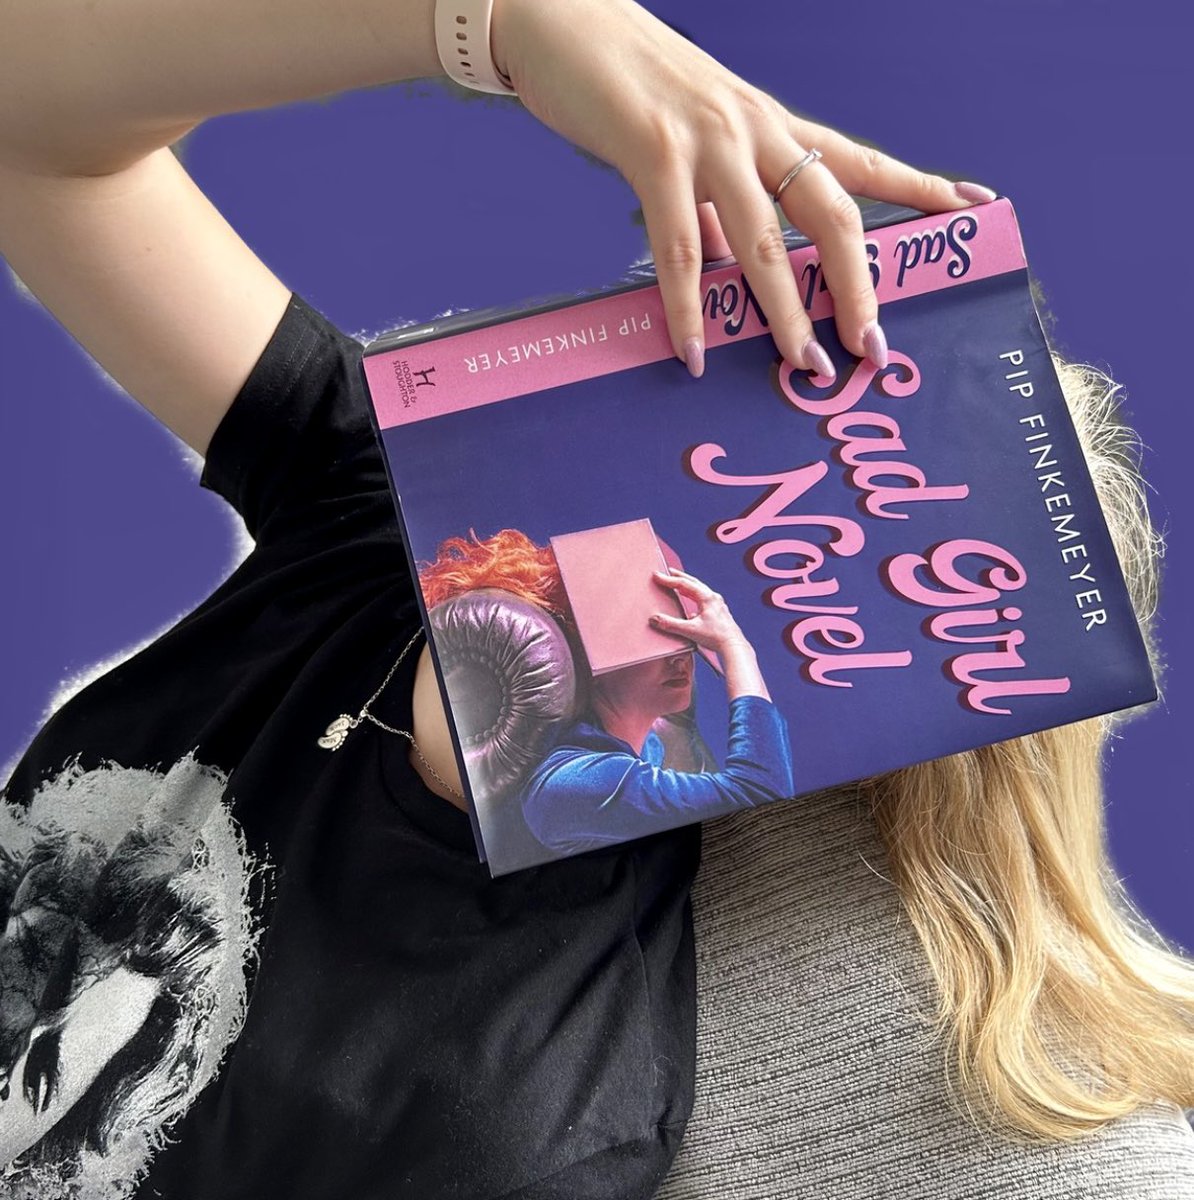 📖 BOOK REVIEW 📖

Sad Girl Novel by Pip Finkemeyer
⭐️⭐️⭐️⭐️ 

“I think Kim speaks for a lot of us with how she was feeling…”

instagram.com/p/CwKxrPwImKP/…

@HodderFiction #SadGirlNovel #BookReview #Books #BookBlogger #BookTwitter